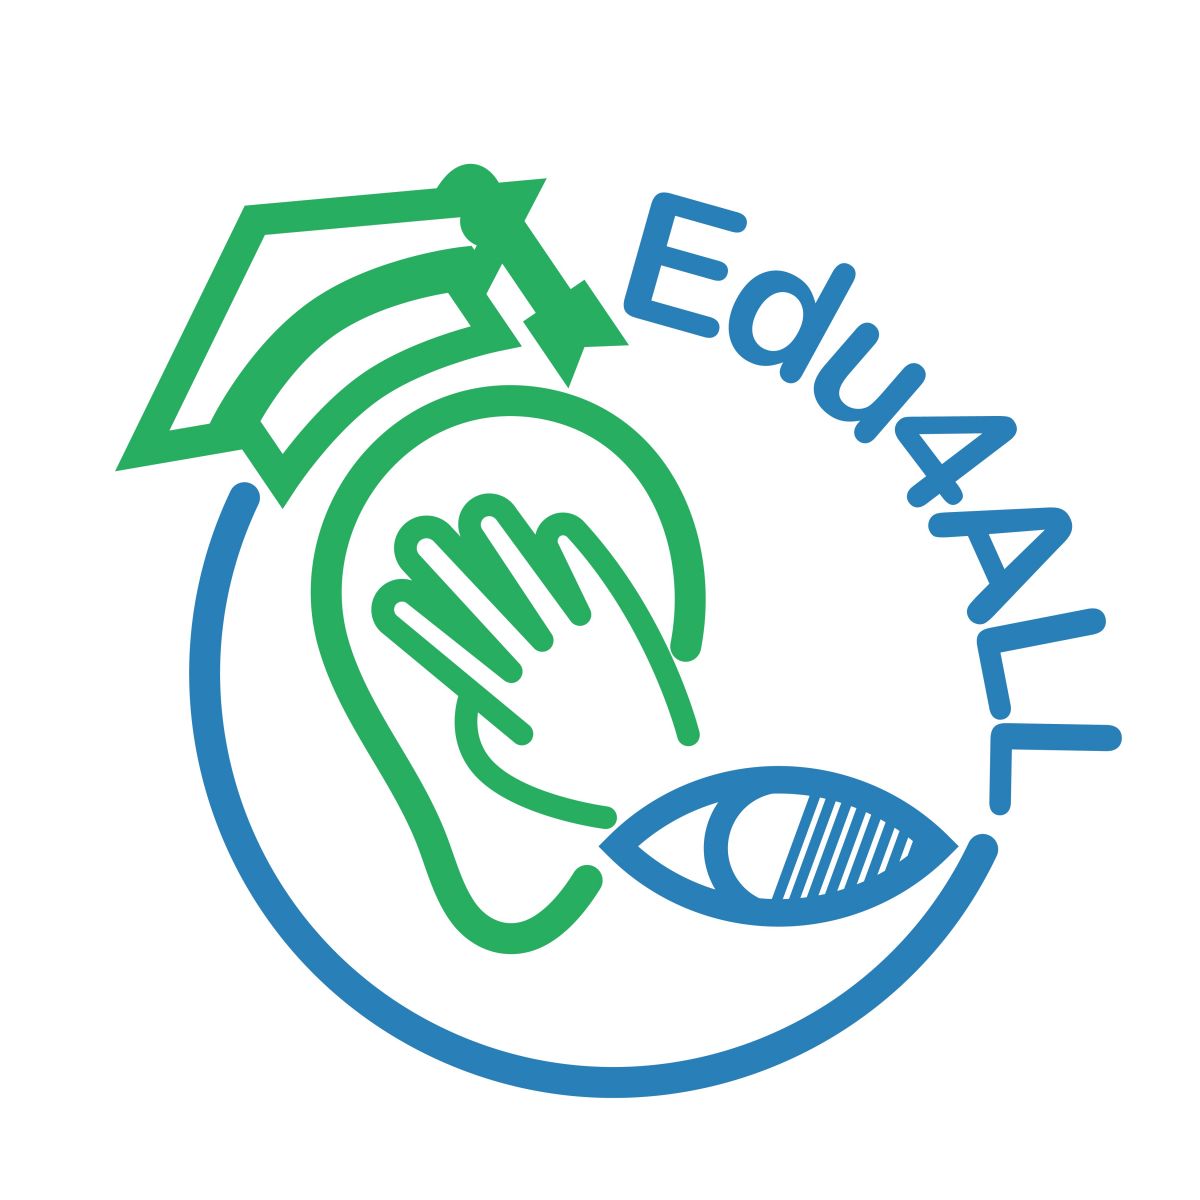 Edu4ALL project logo